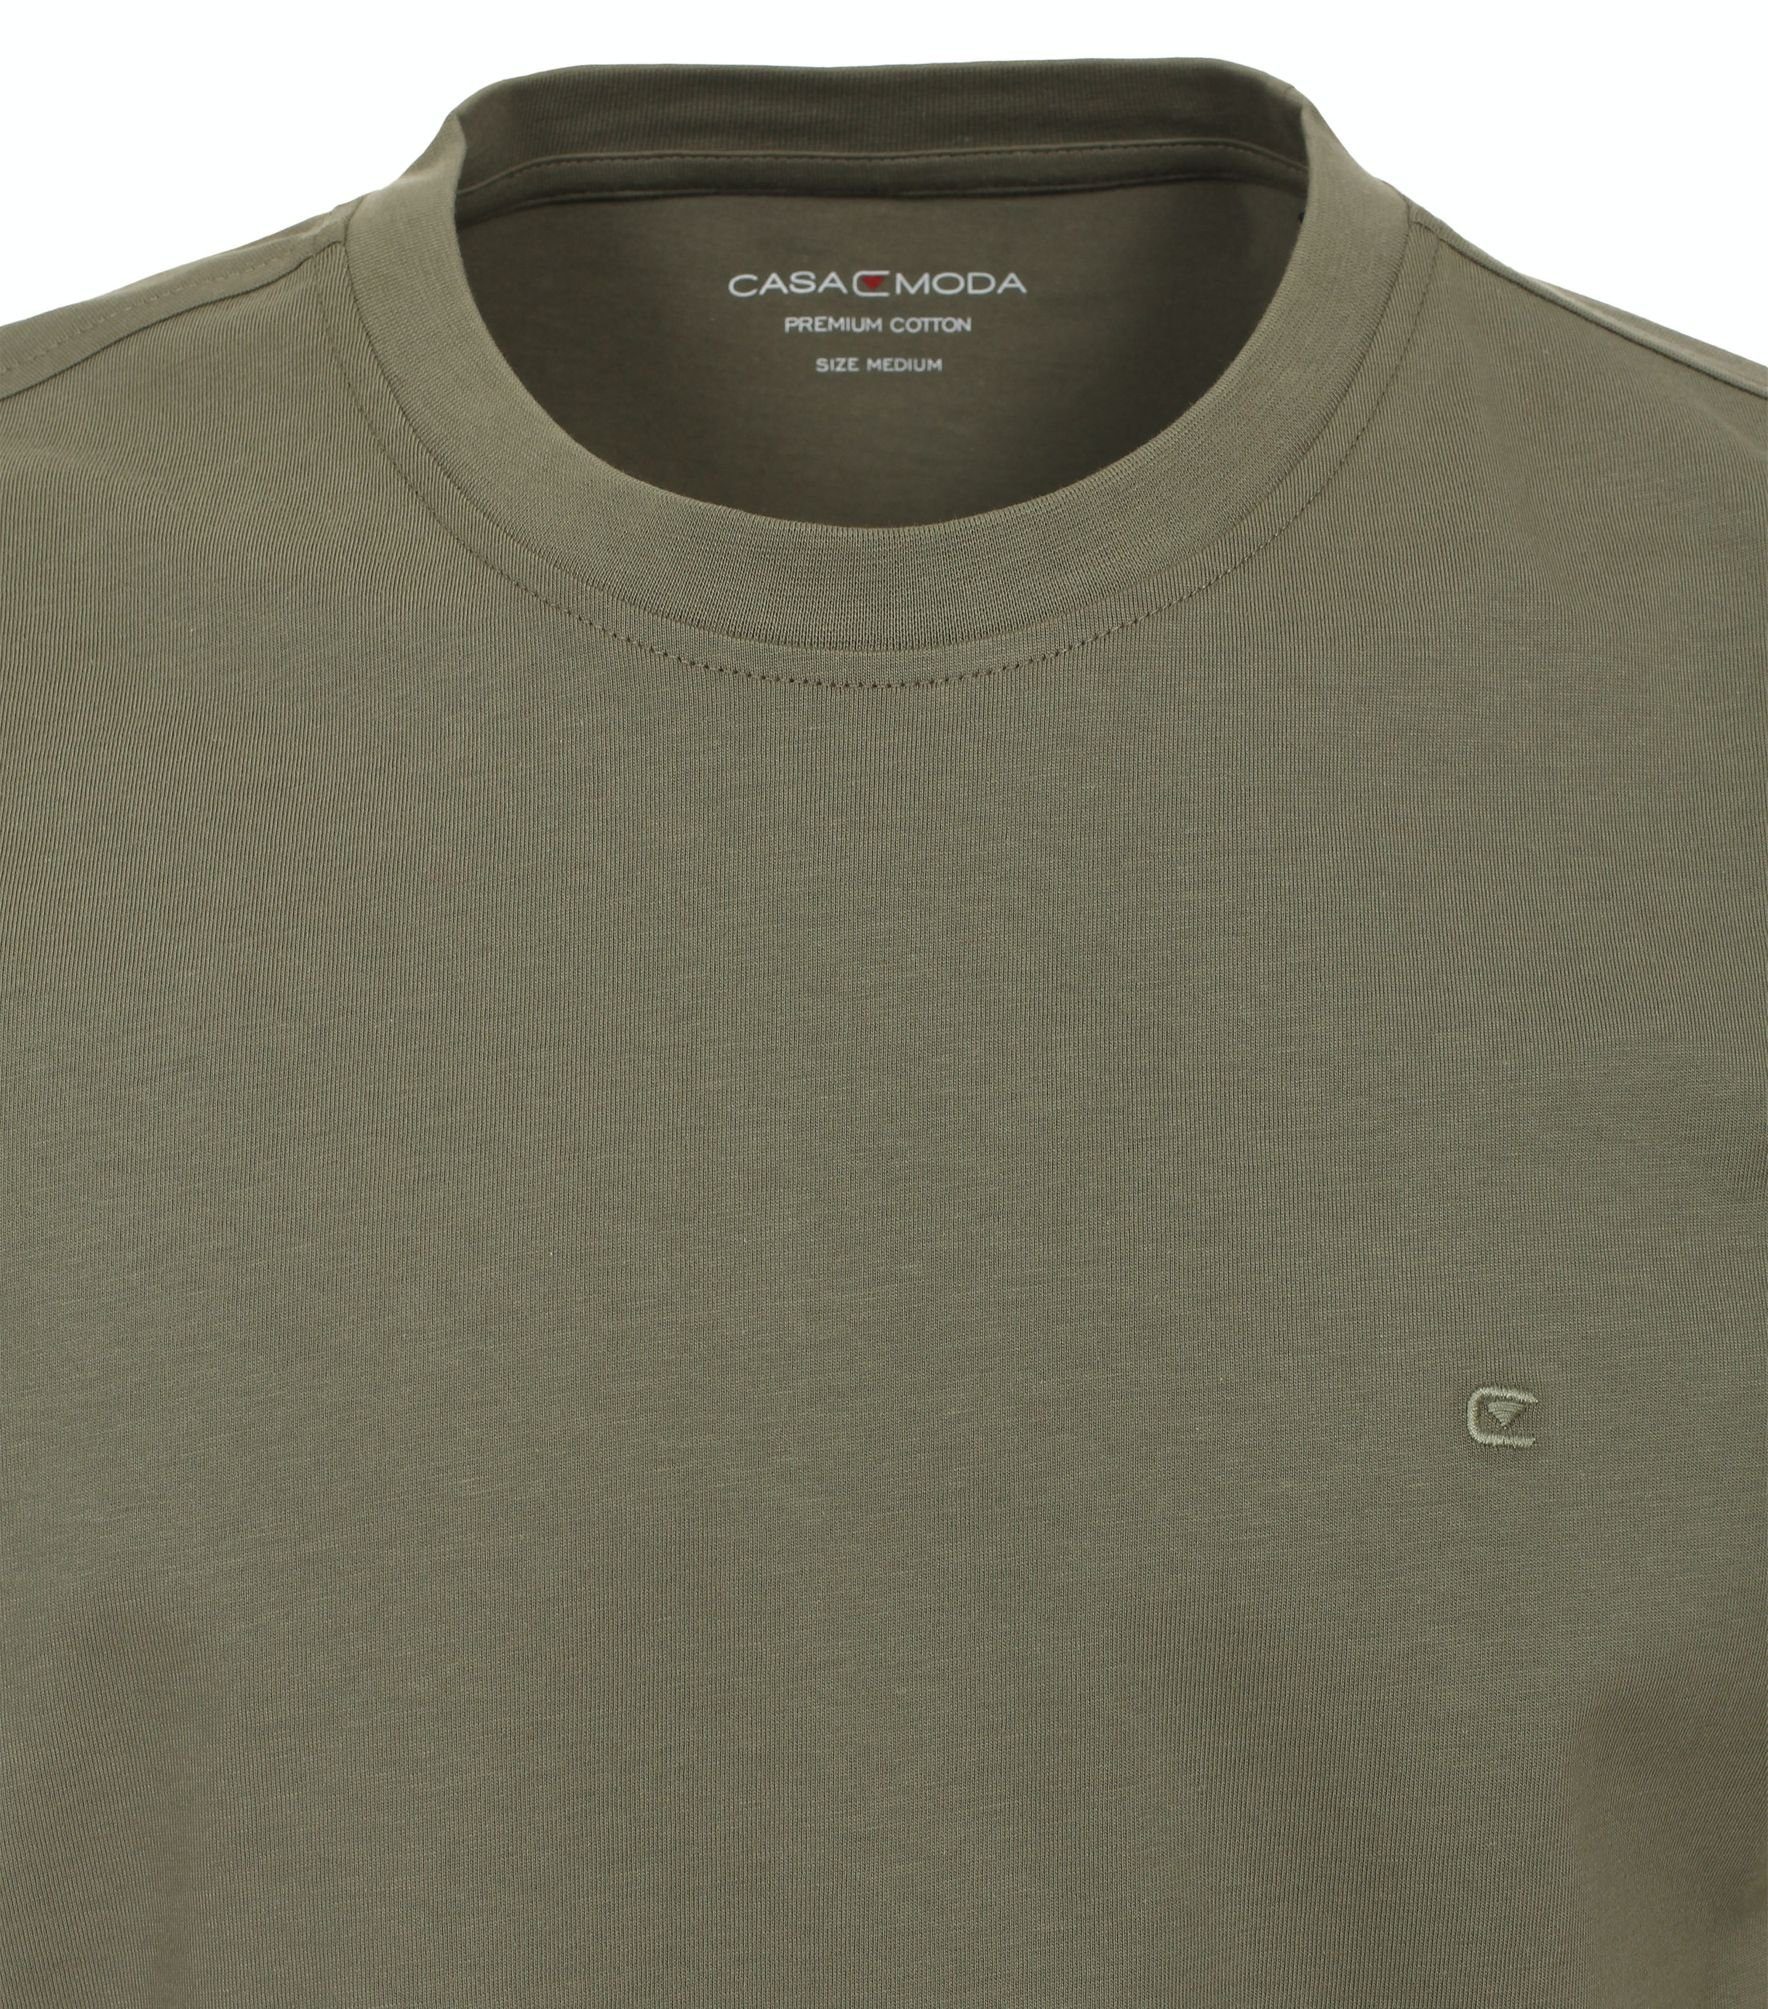 T-Shirt grün 004200 T-Shirt CASAMODA (336) unifarben